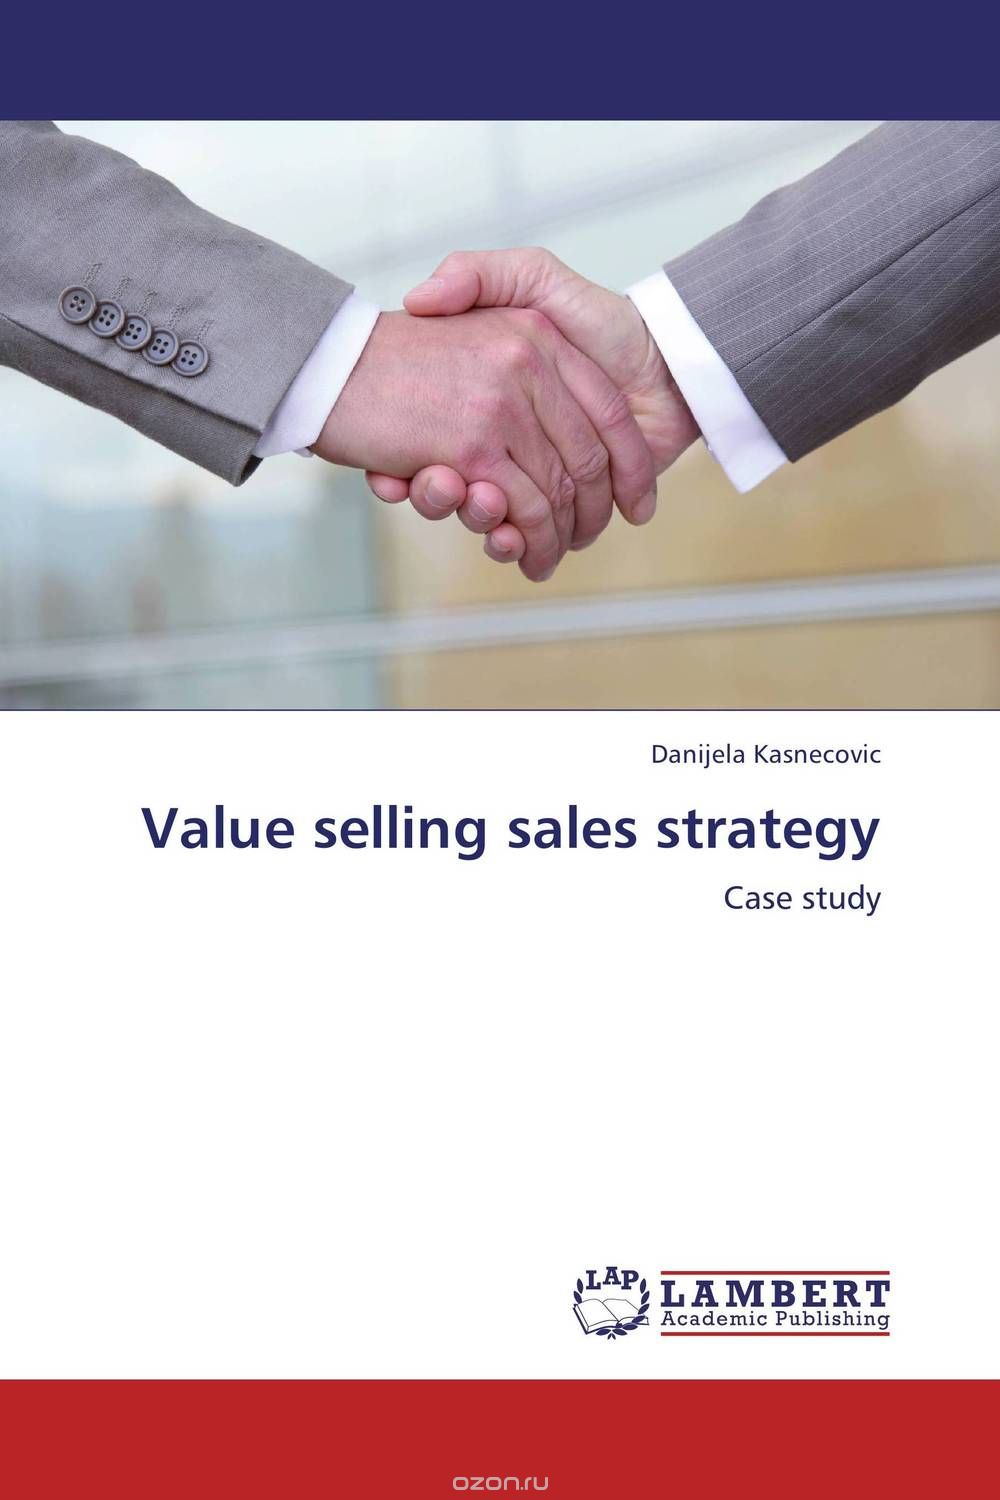 Скачать книгу "Value selling sales strategy"